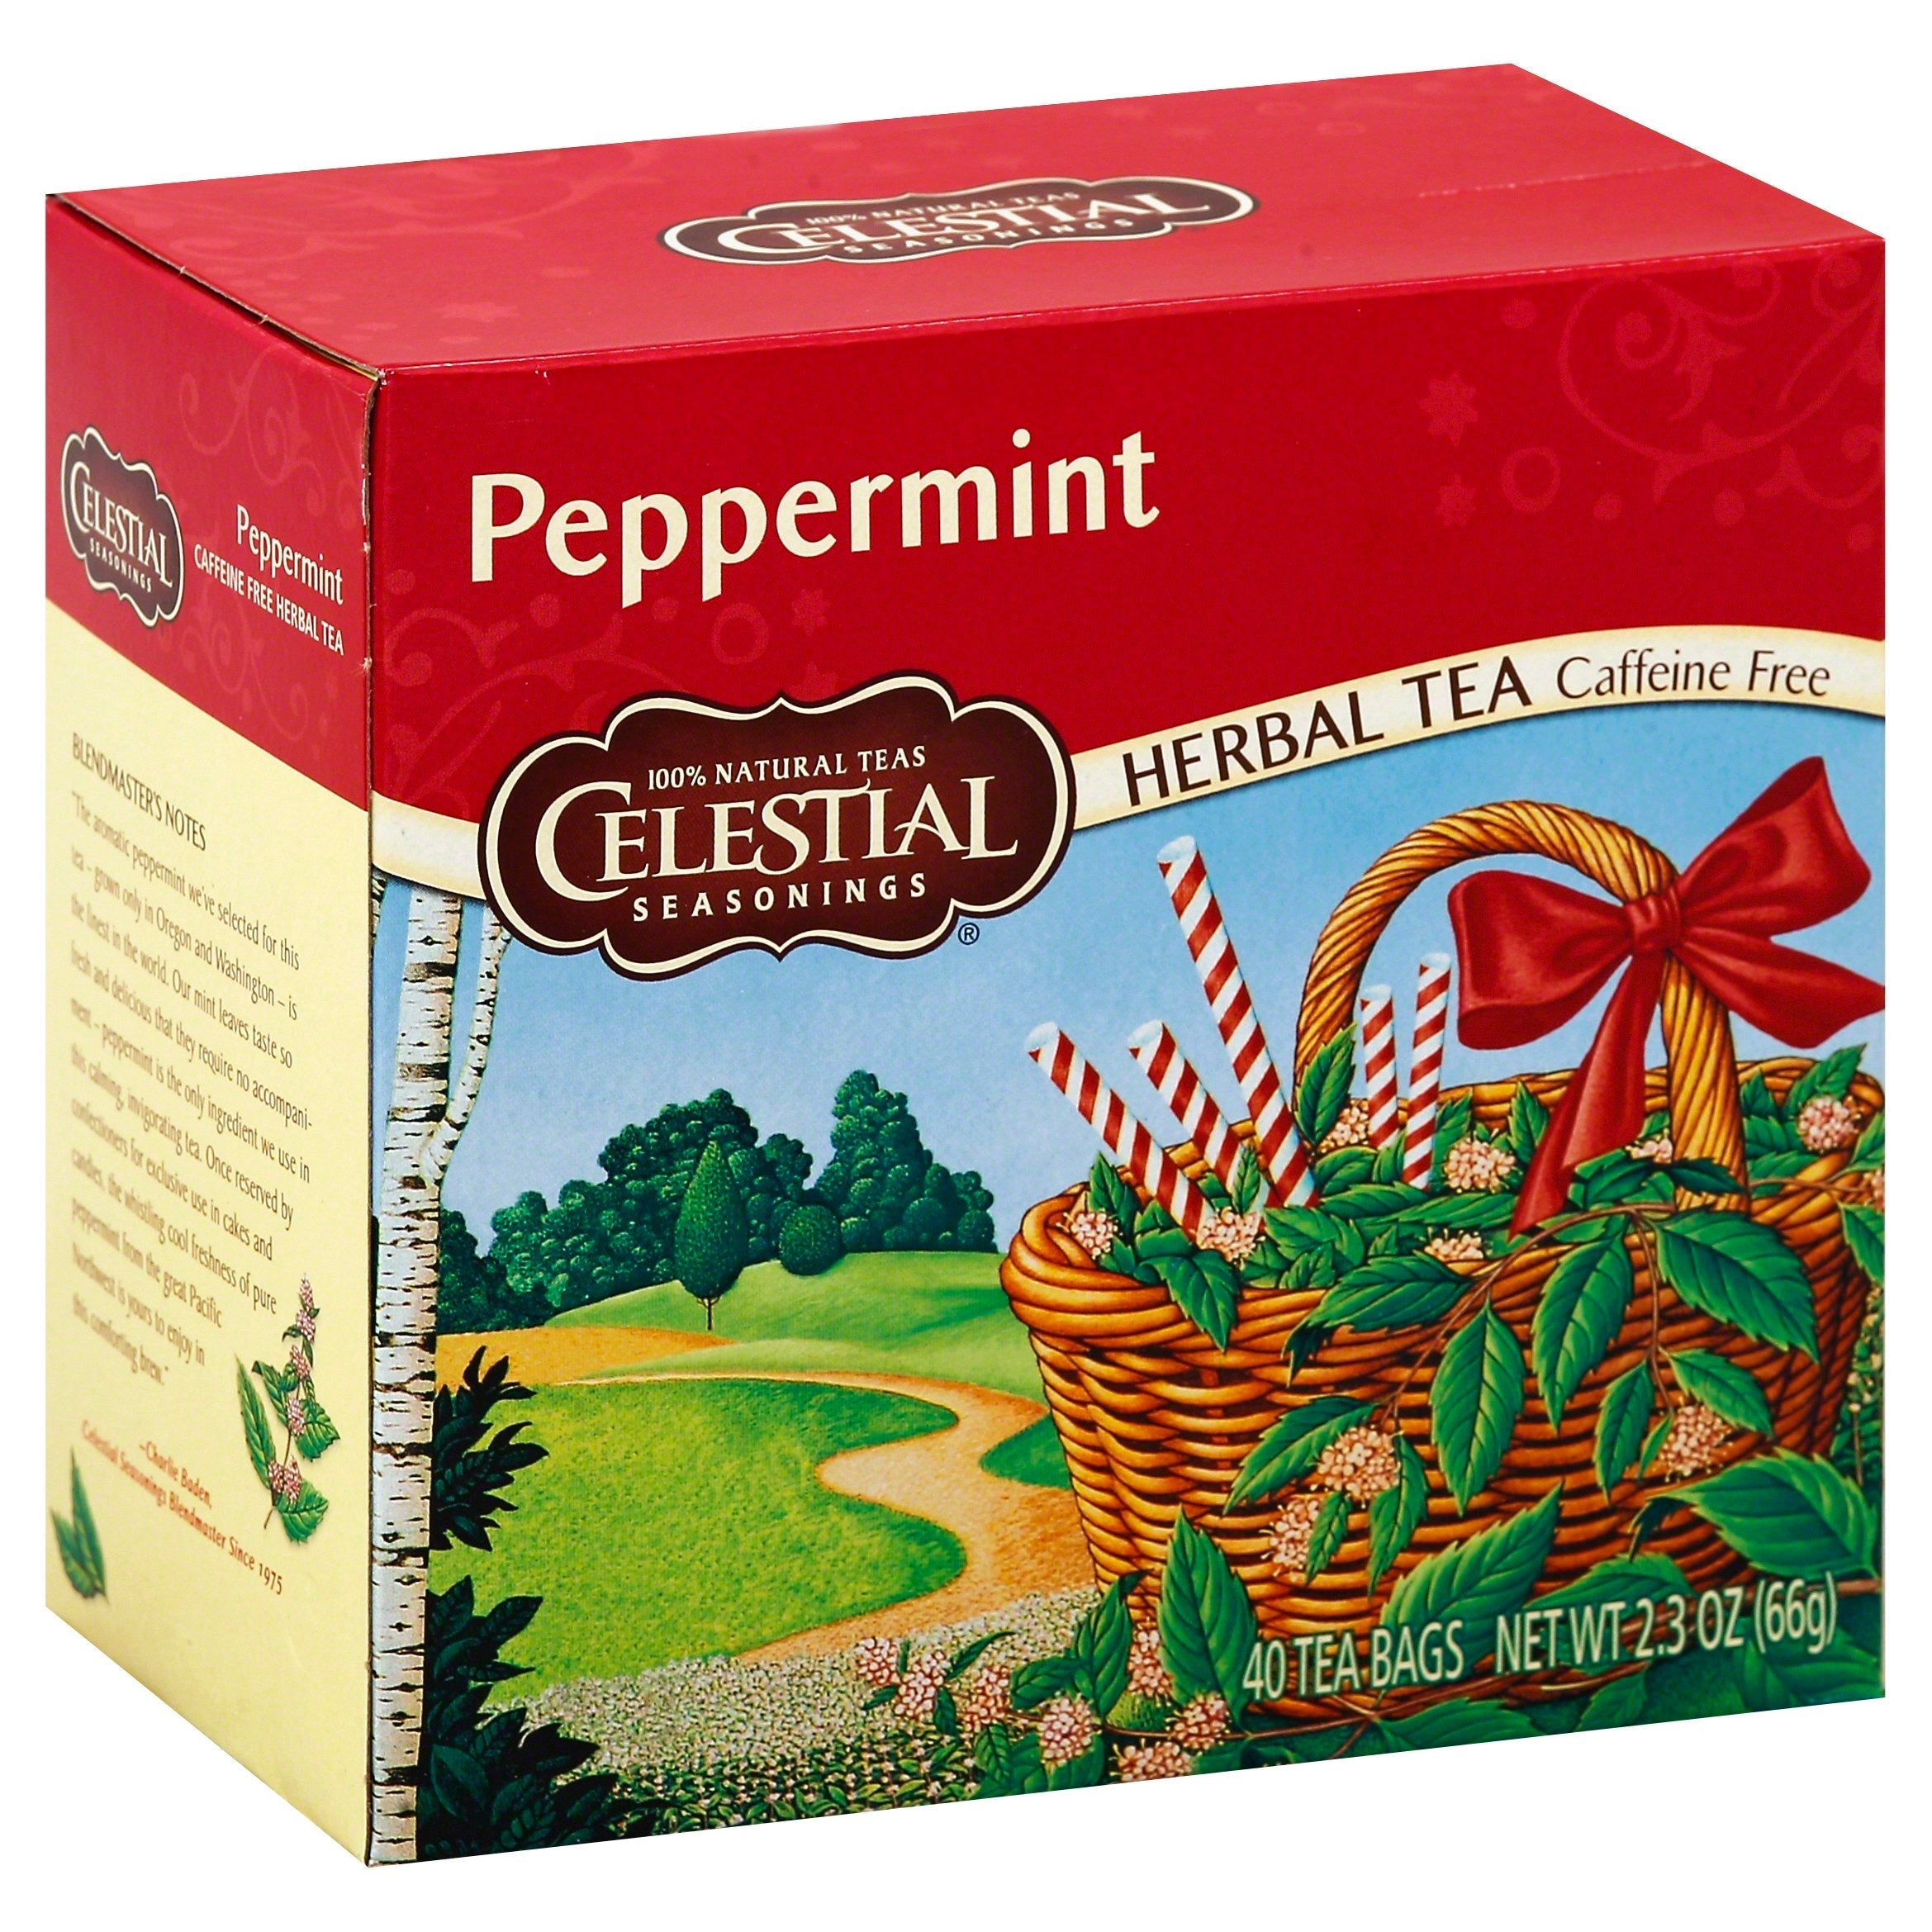 Save on Celestial Seasonings Bengal Spice Herbal Tea Bags Caffeine